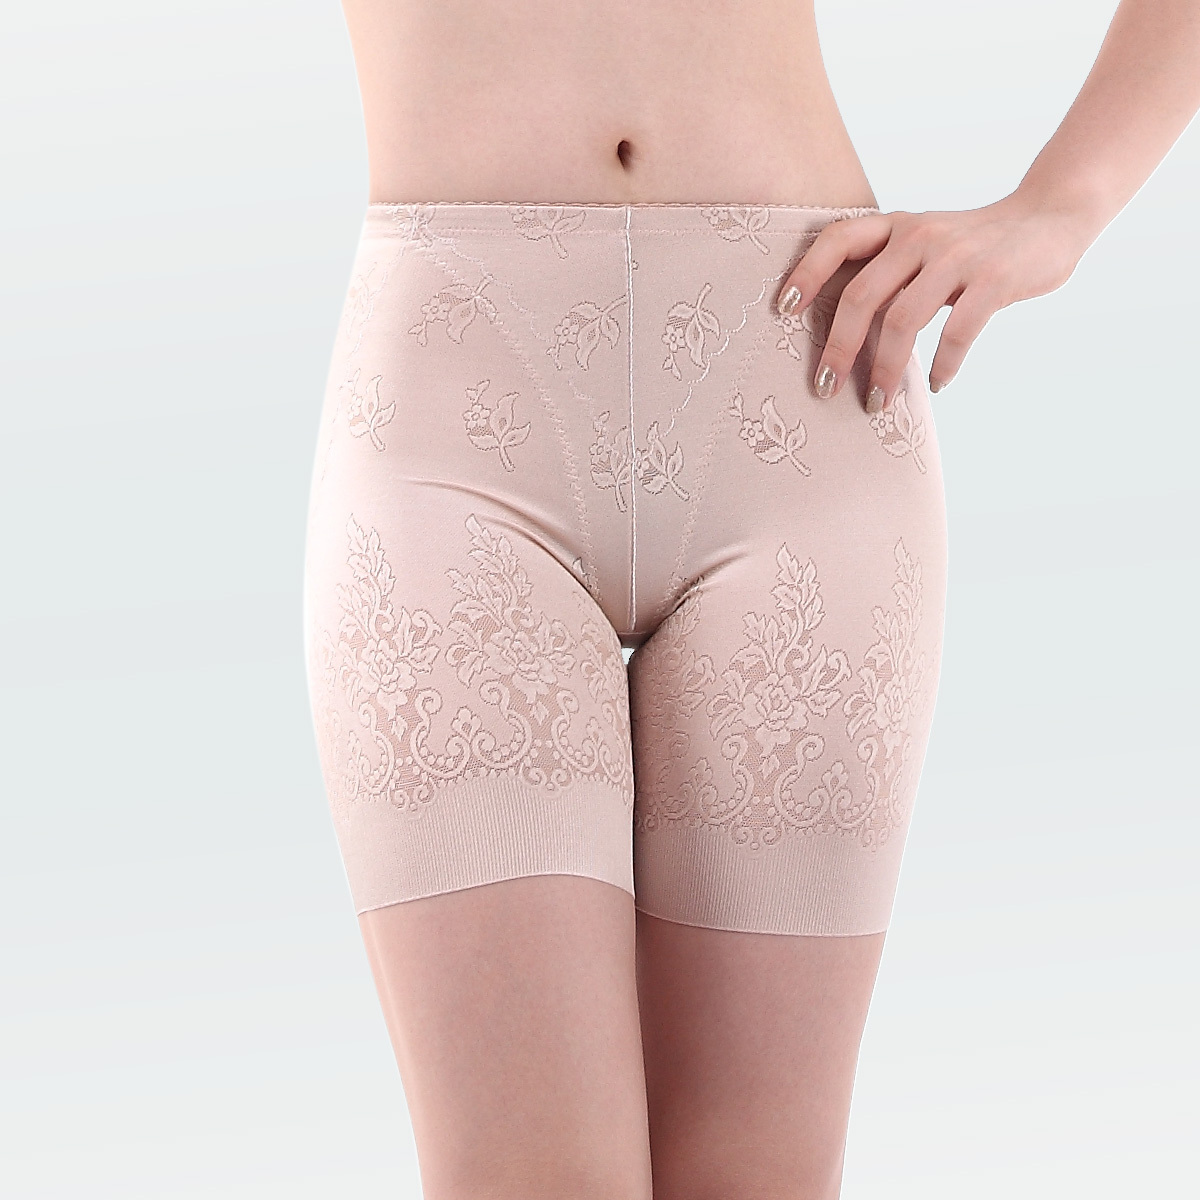 Body shaping pants viscose thin abdomen drawing pants seamless butt-lifting bottom panties slimming beauty care pants 82071